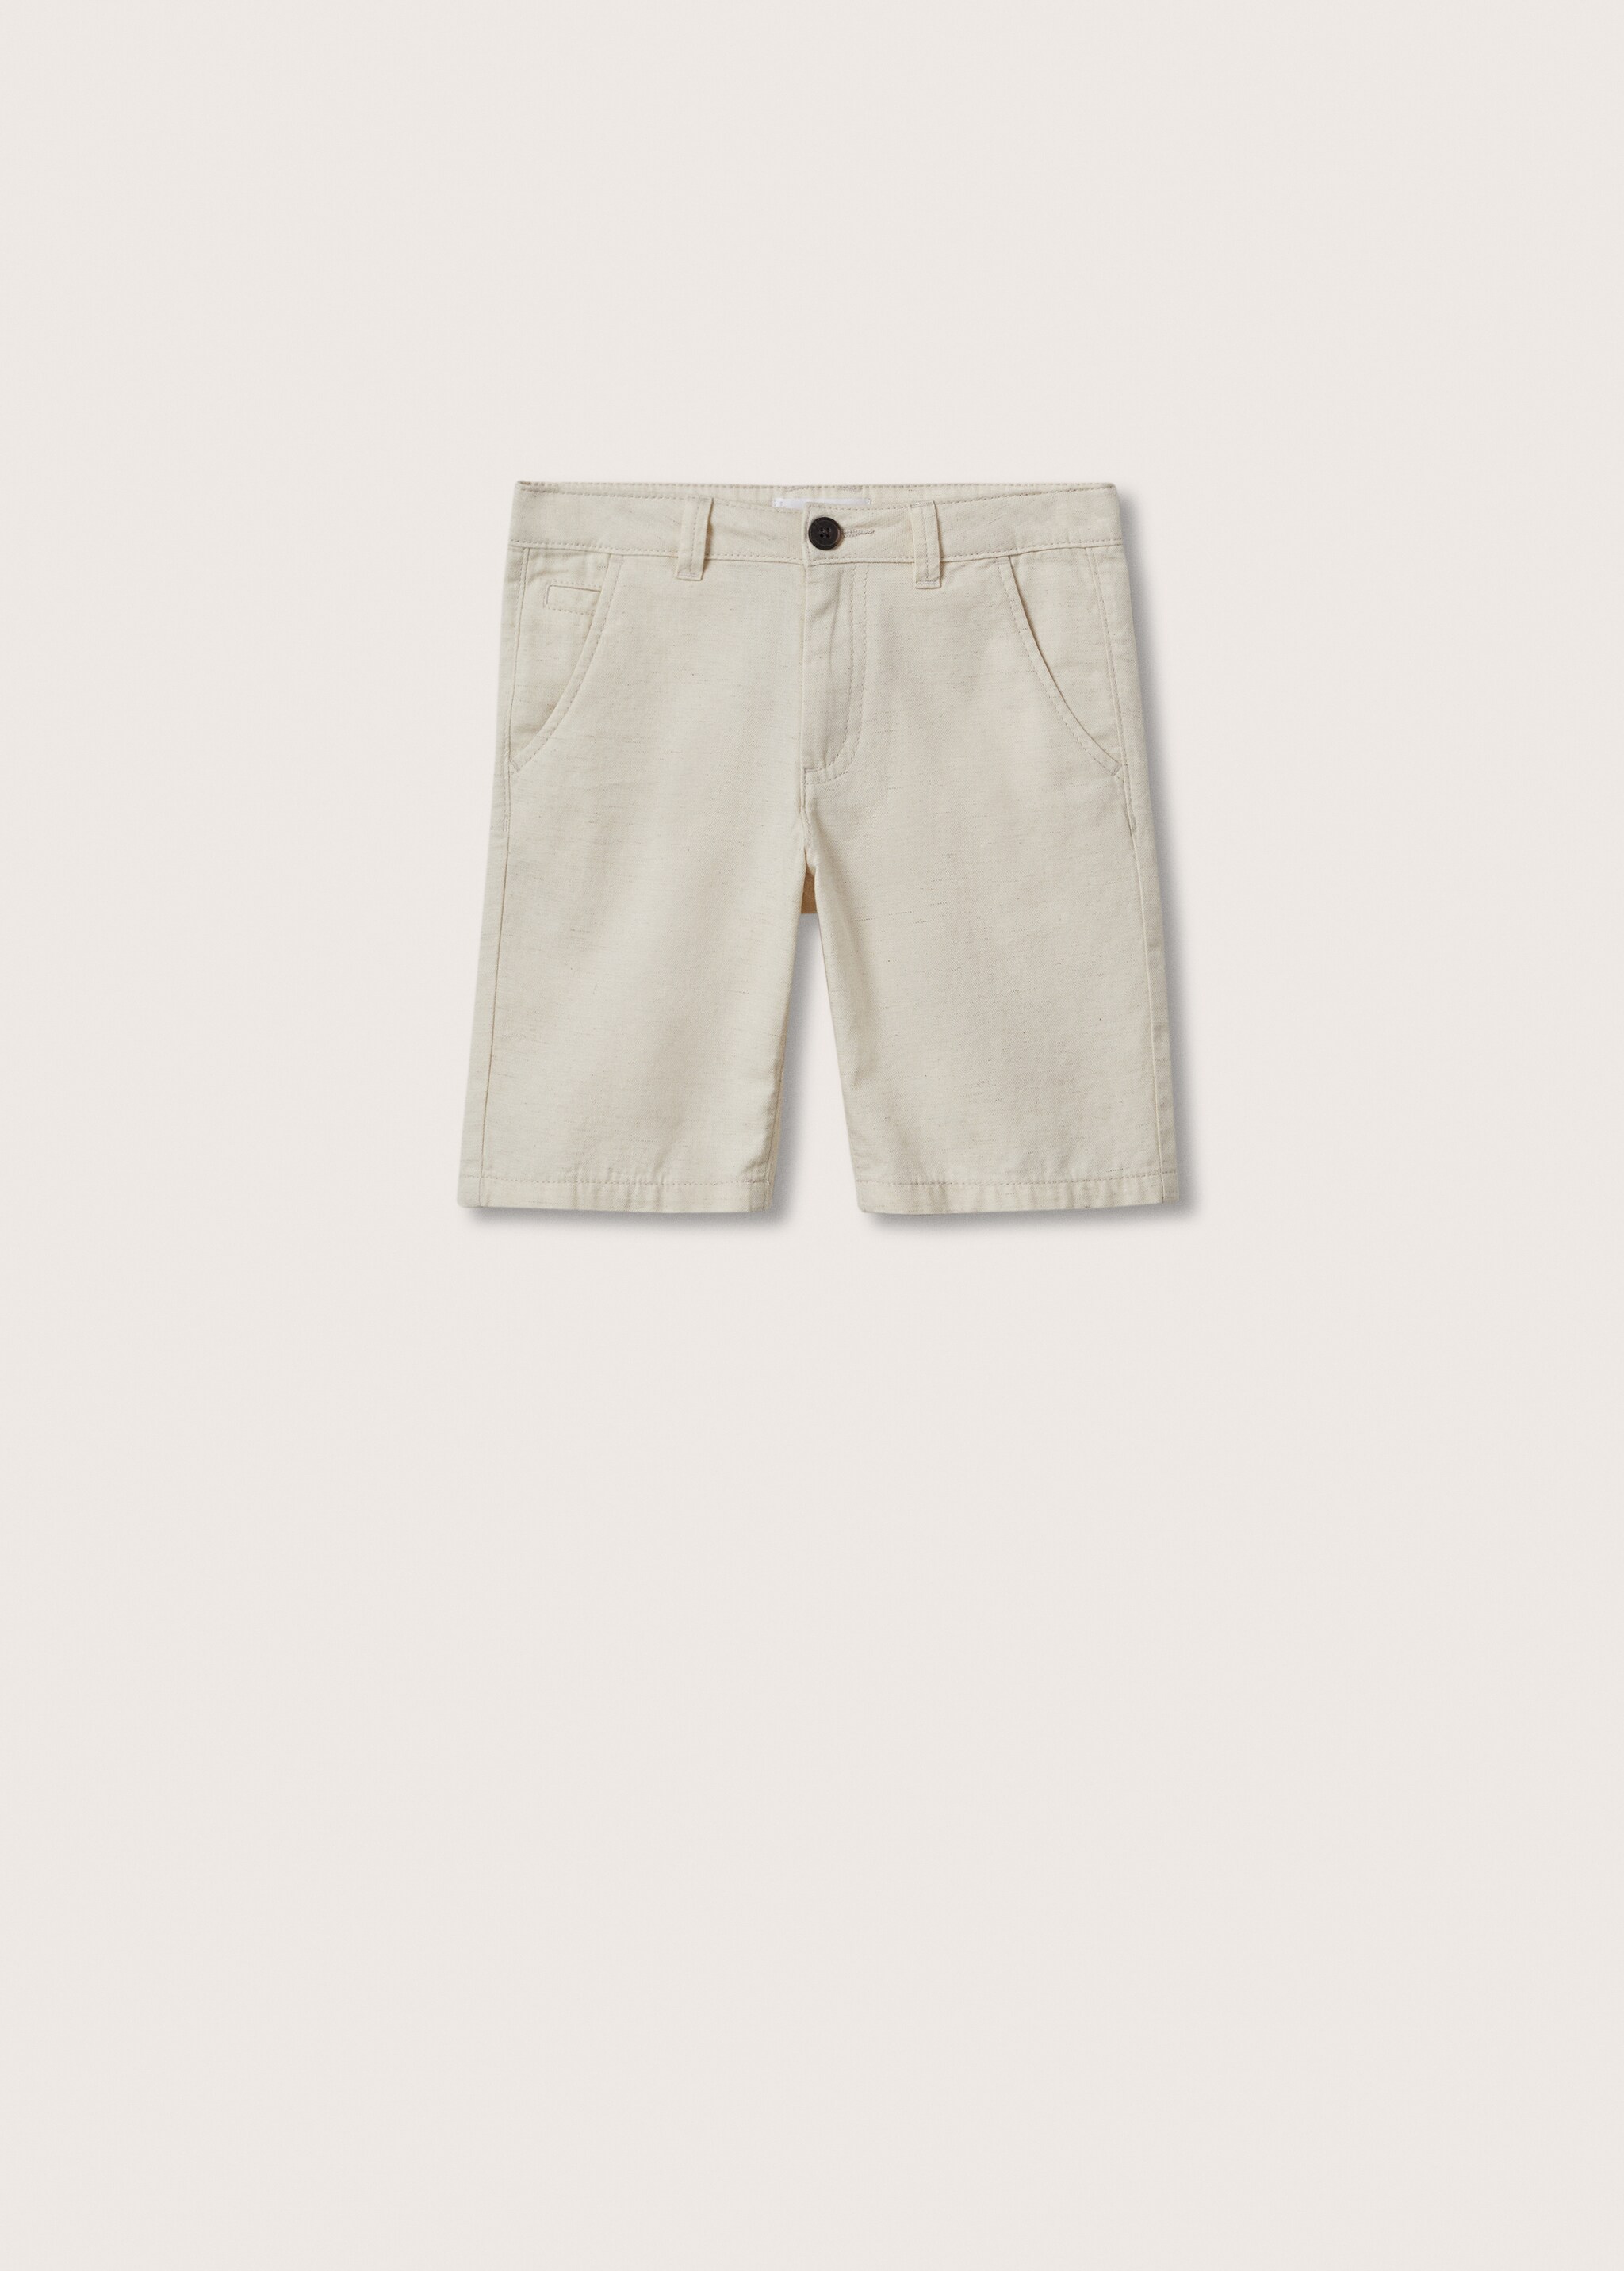 Linen cotton bermuda shorts - Article without model